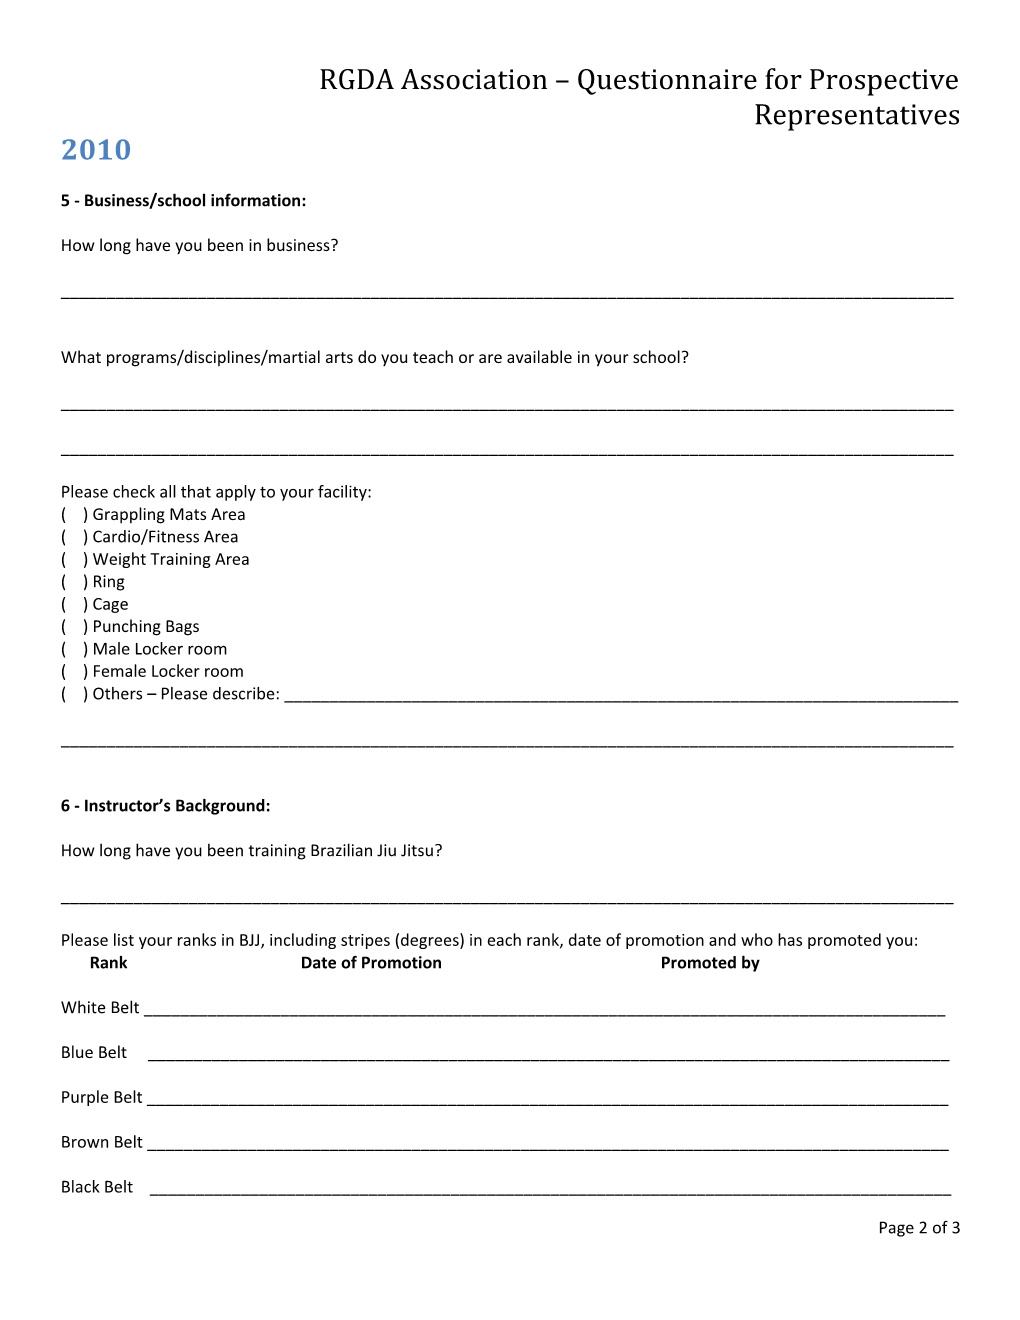 RGDA Association Questionnaire for Prospective Representatives